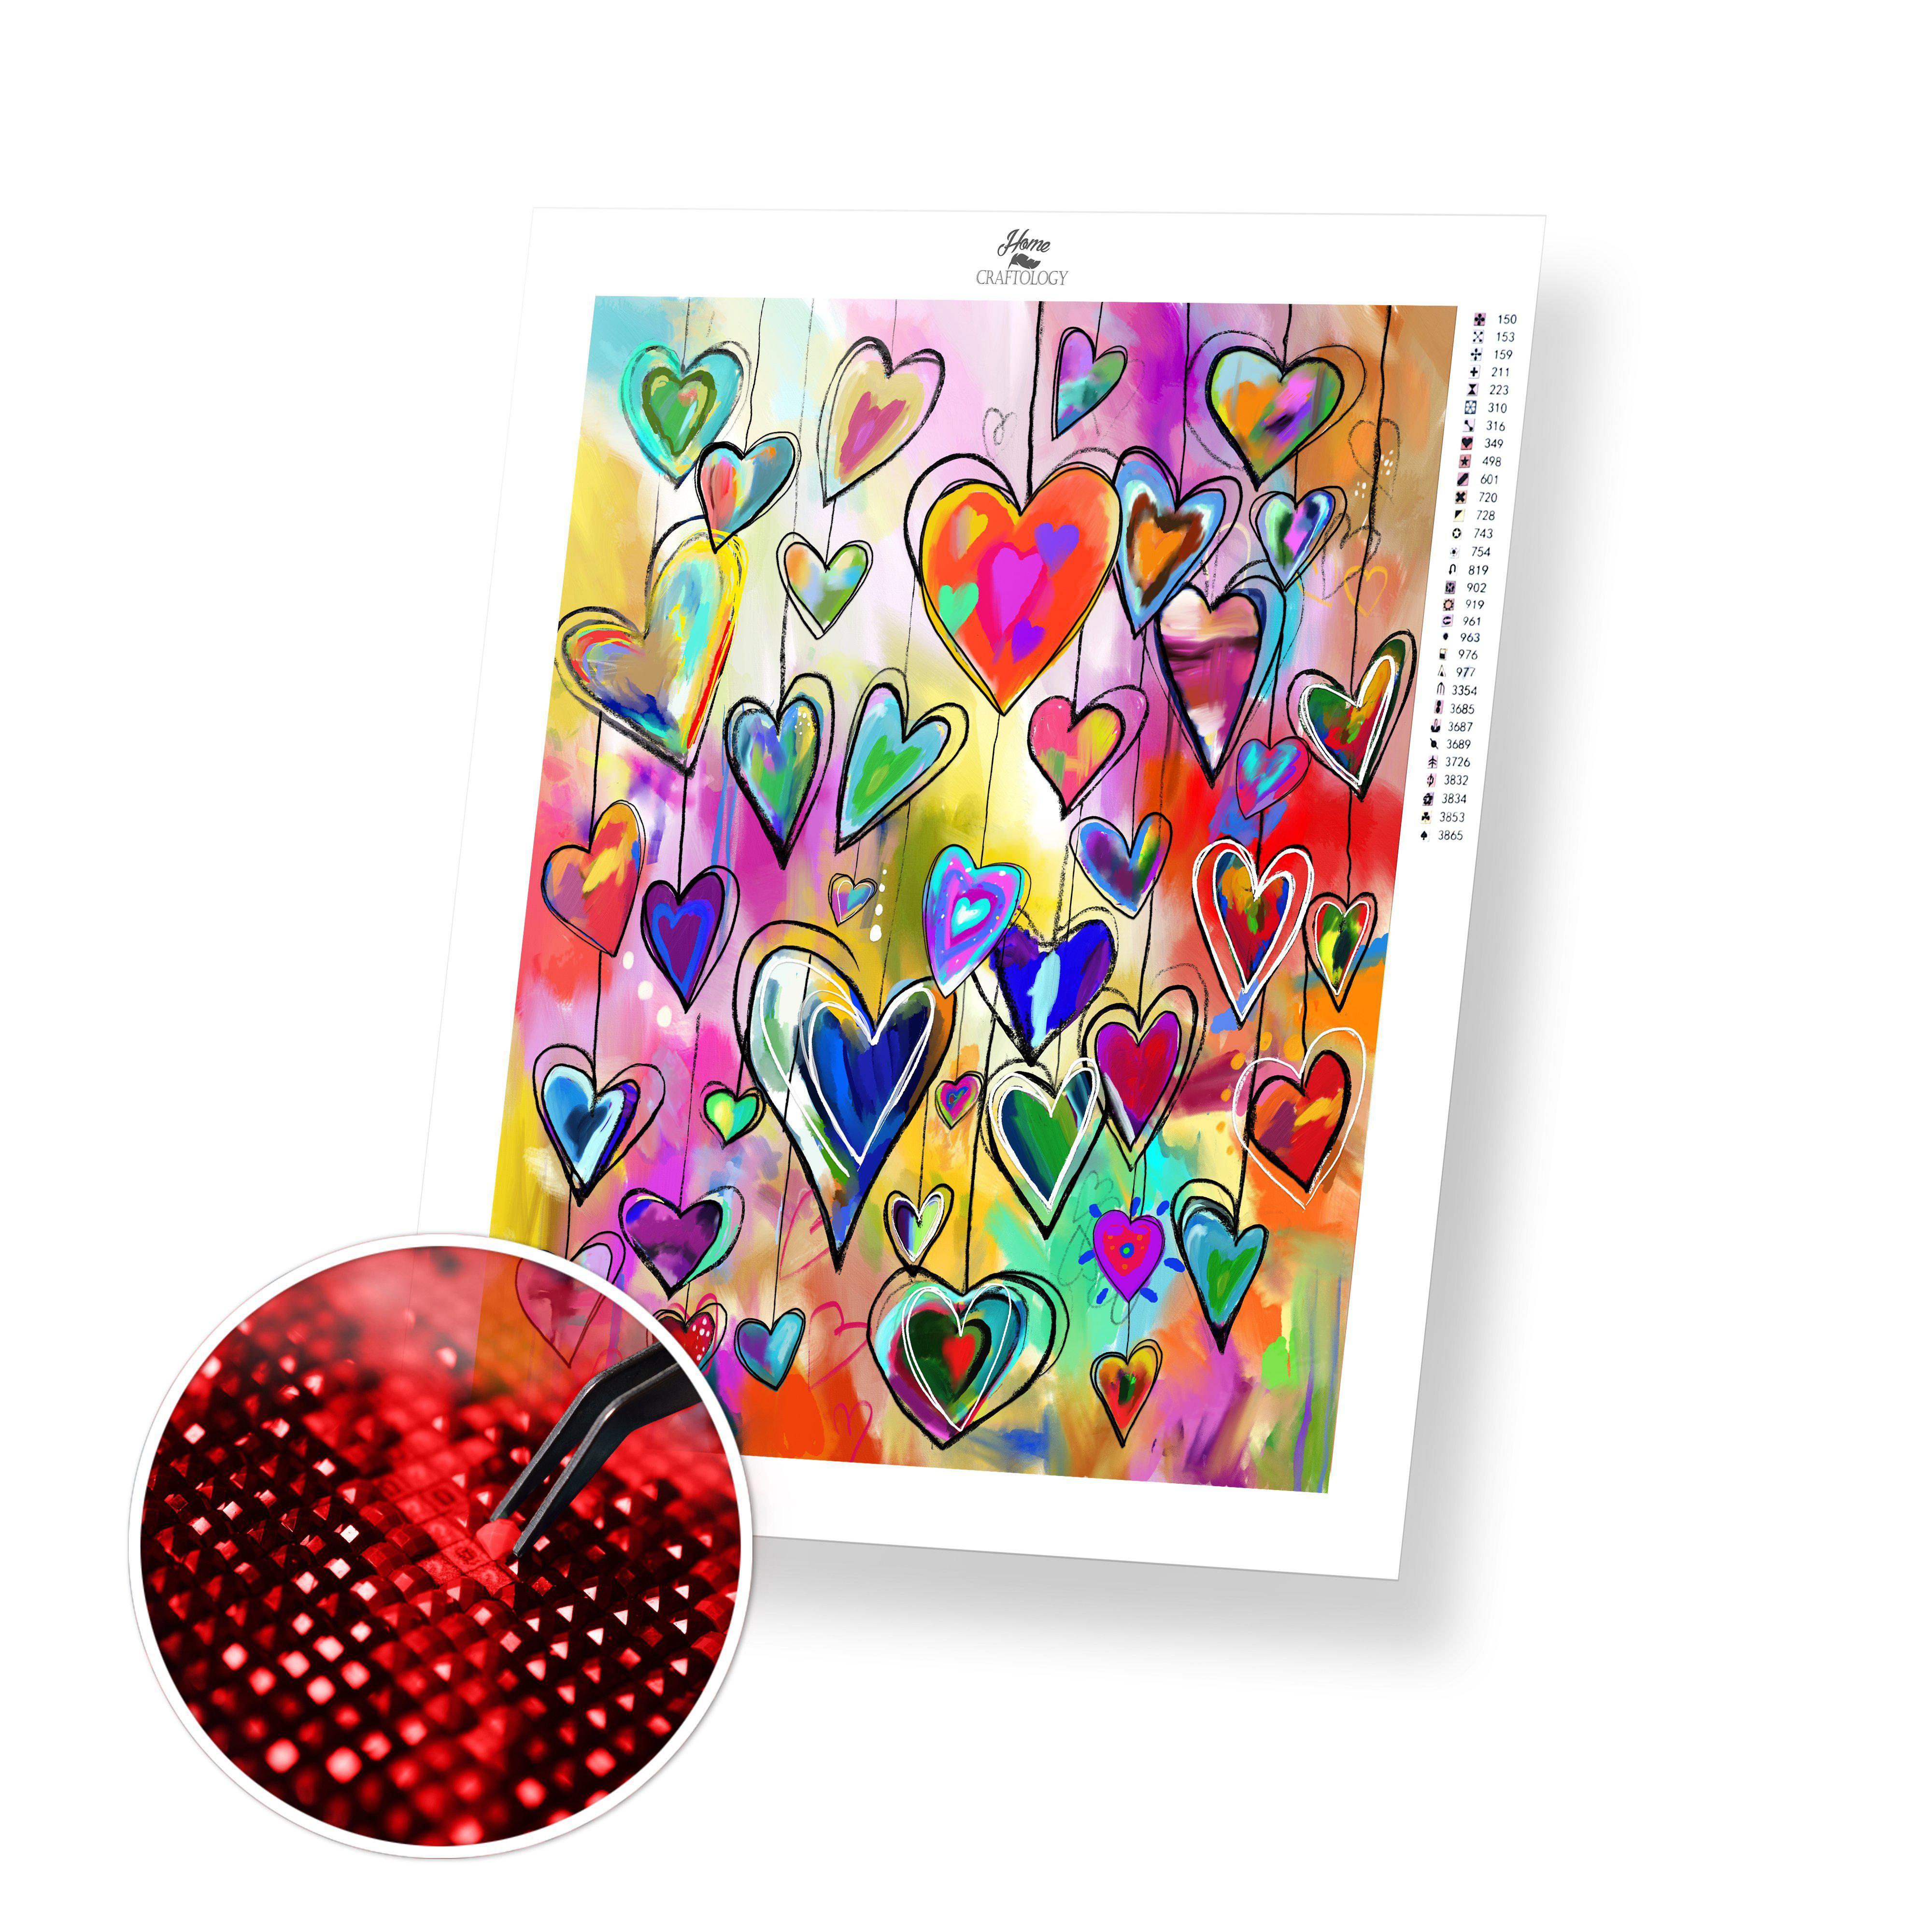 Diamond Painting - Full Square - Valentines Day Heart Cat(35*35cm